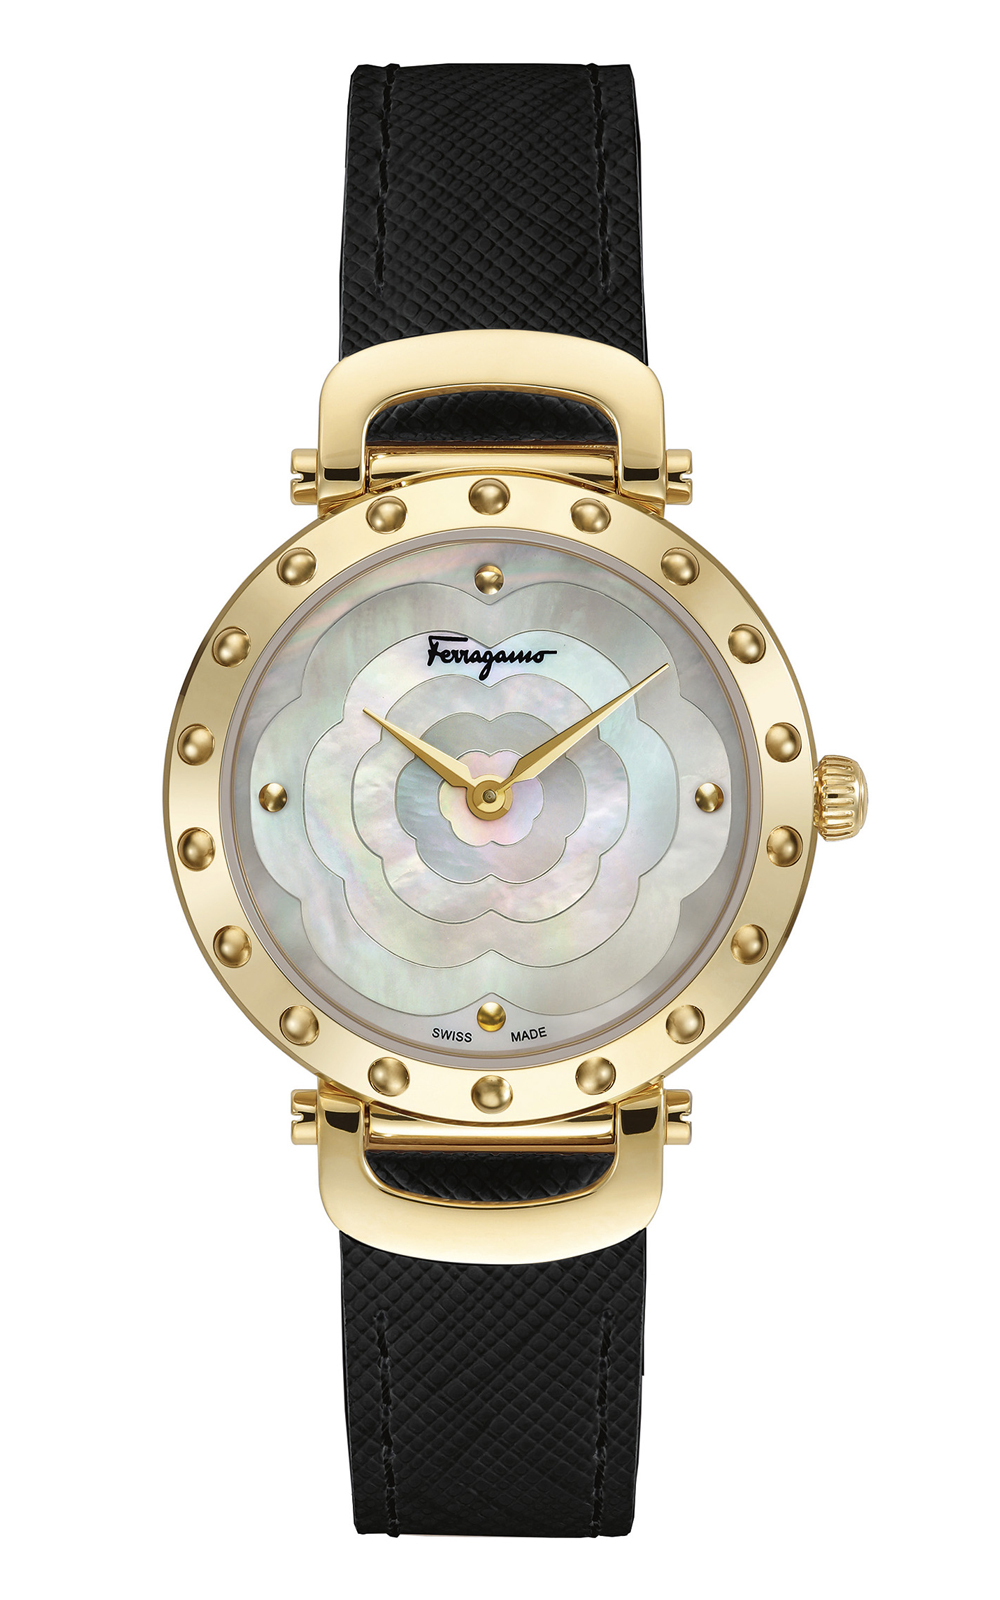 Đồng hồ nữ Salvatore Ferragamo Style SFDM00218